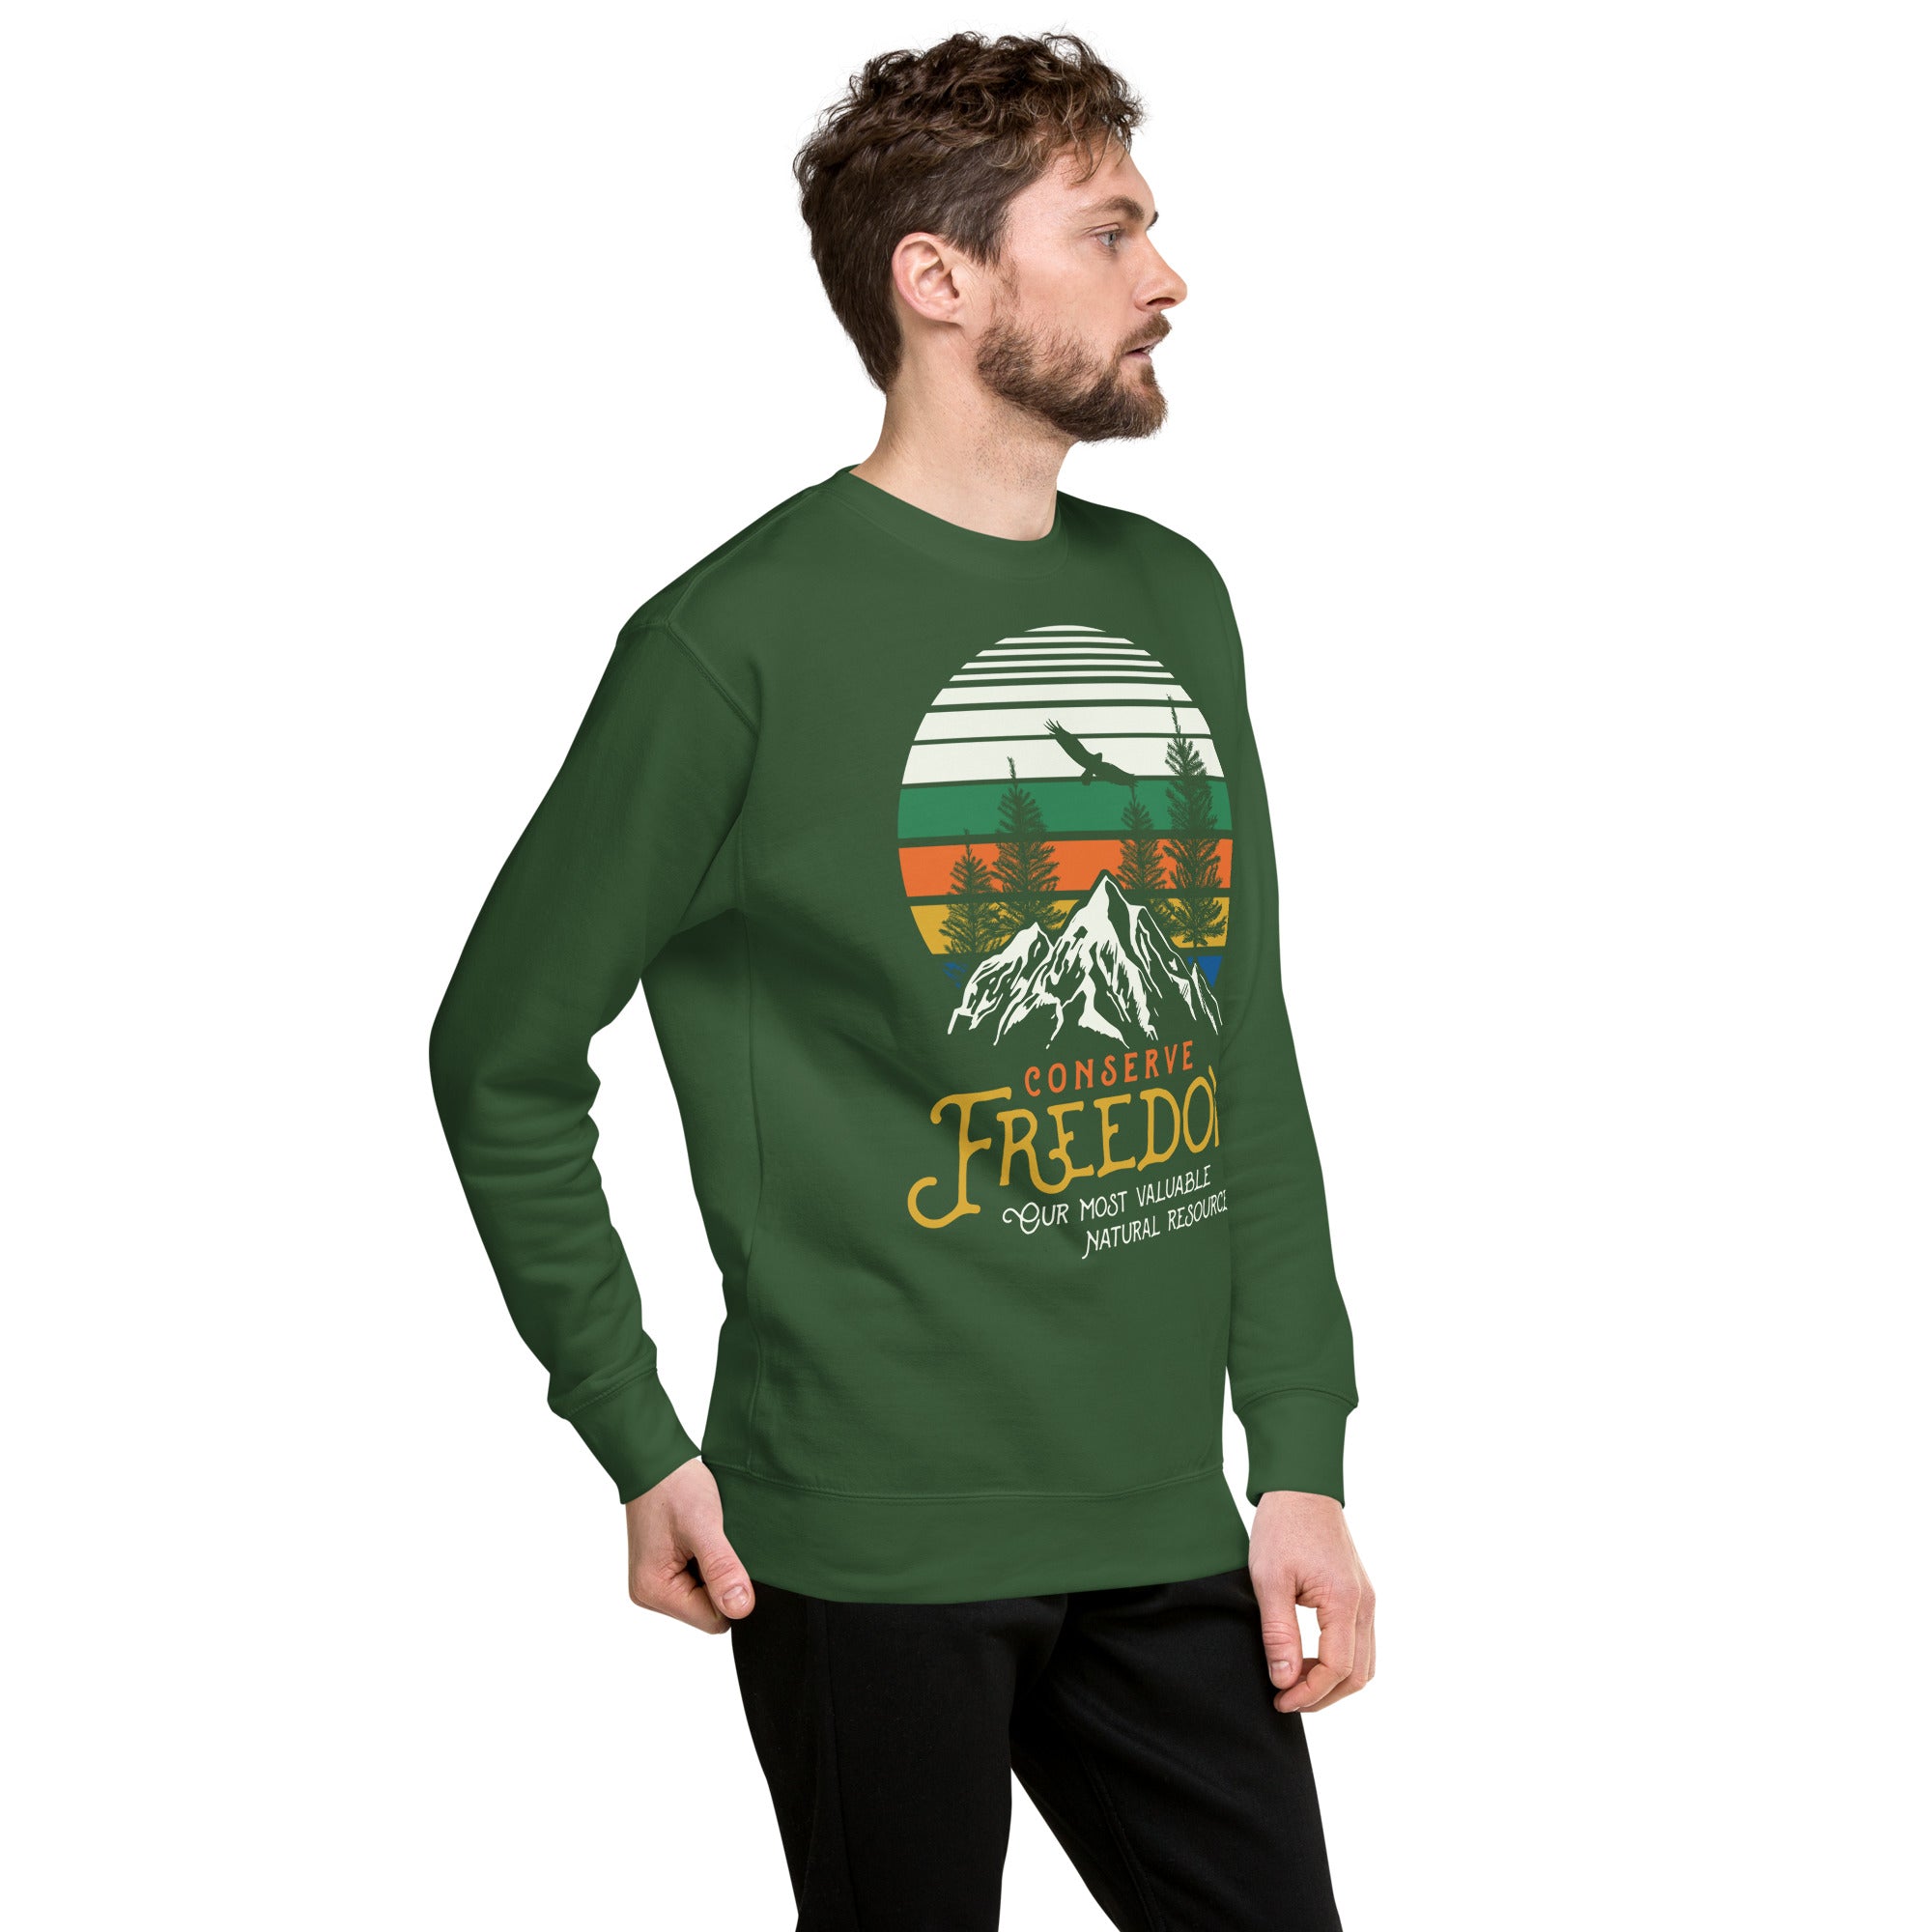 Conserve Freedom Crewneck Sweatshirt